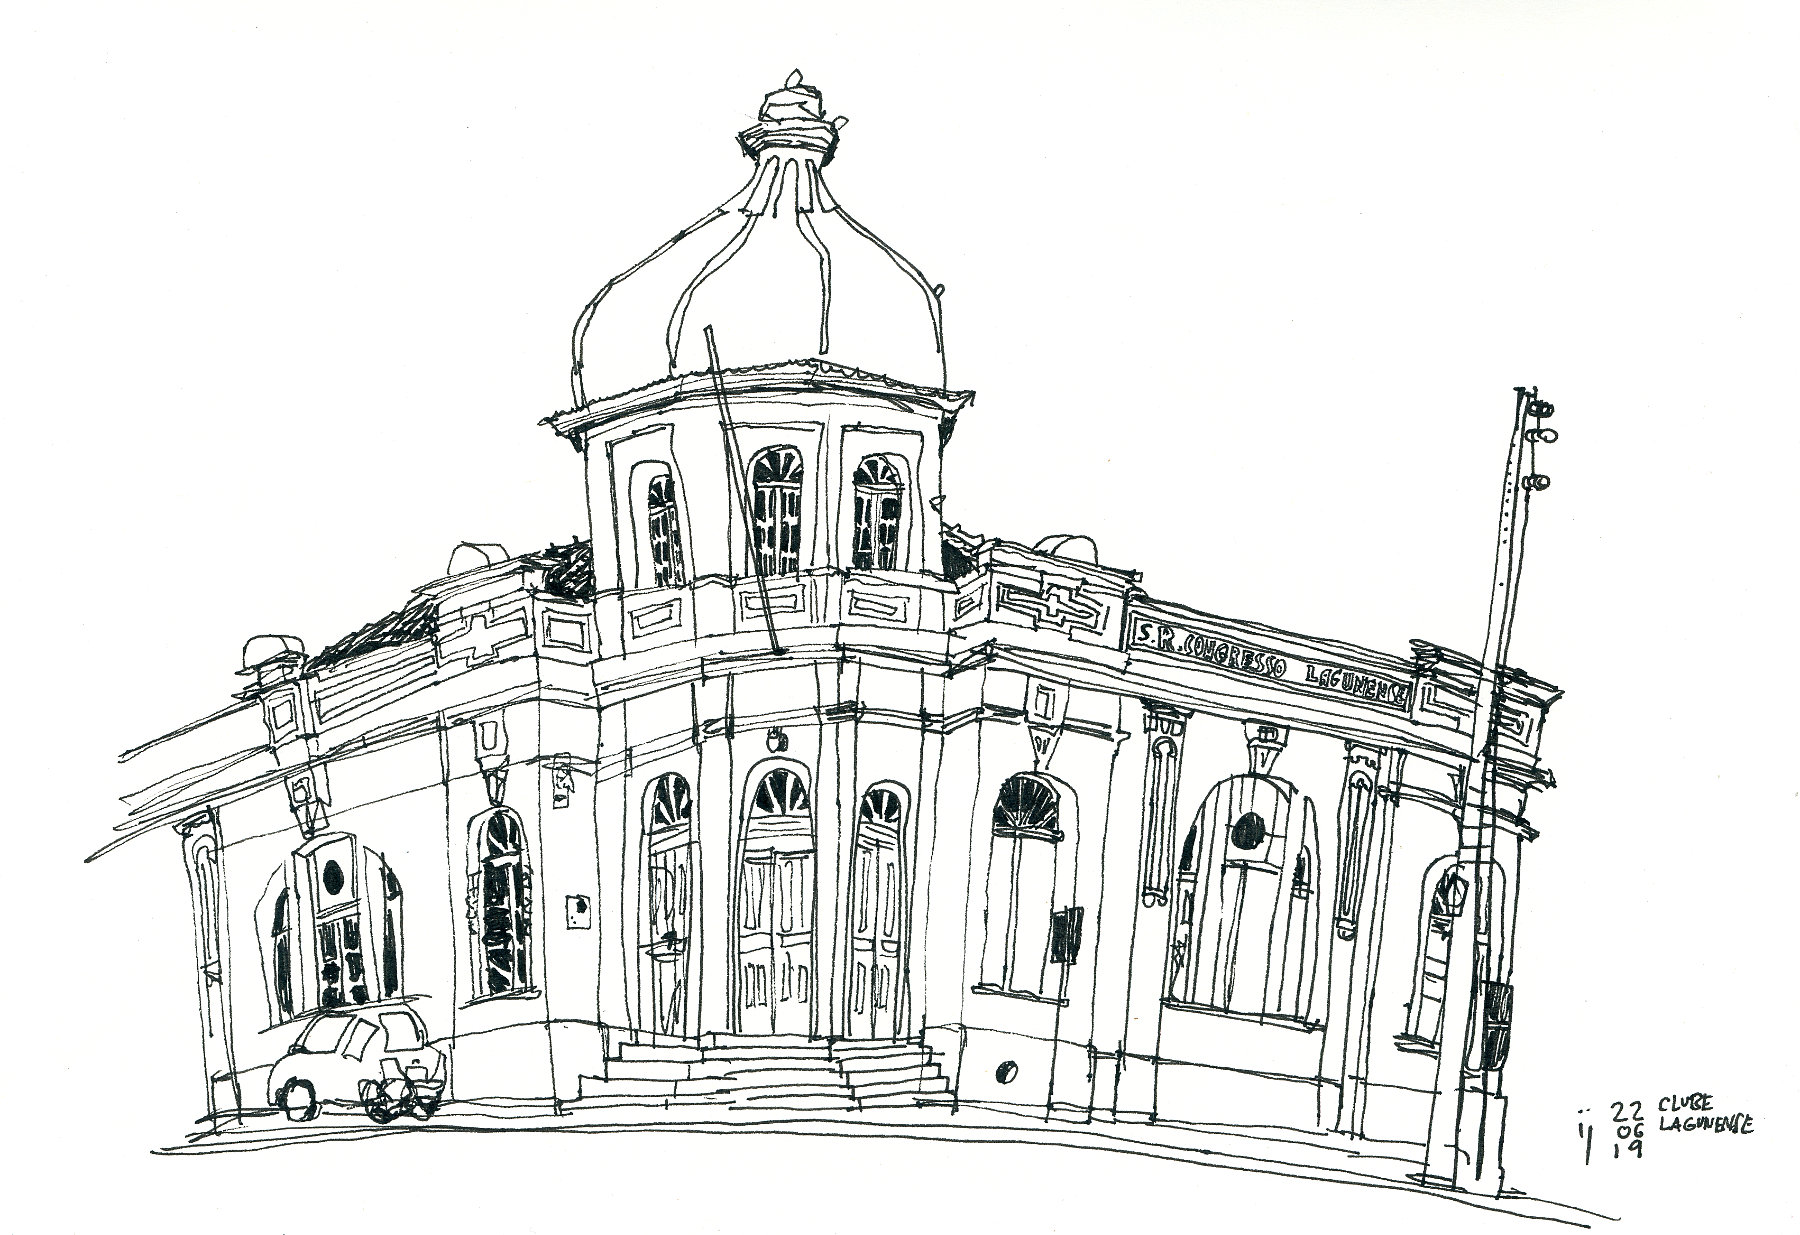 Desenho da fachada do Clube Congresso Lagunense